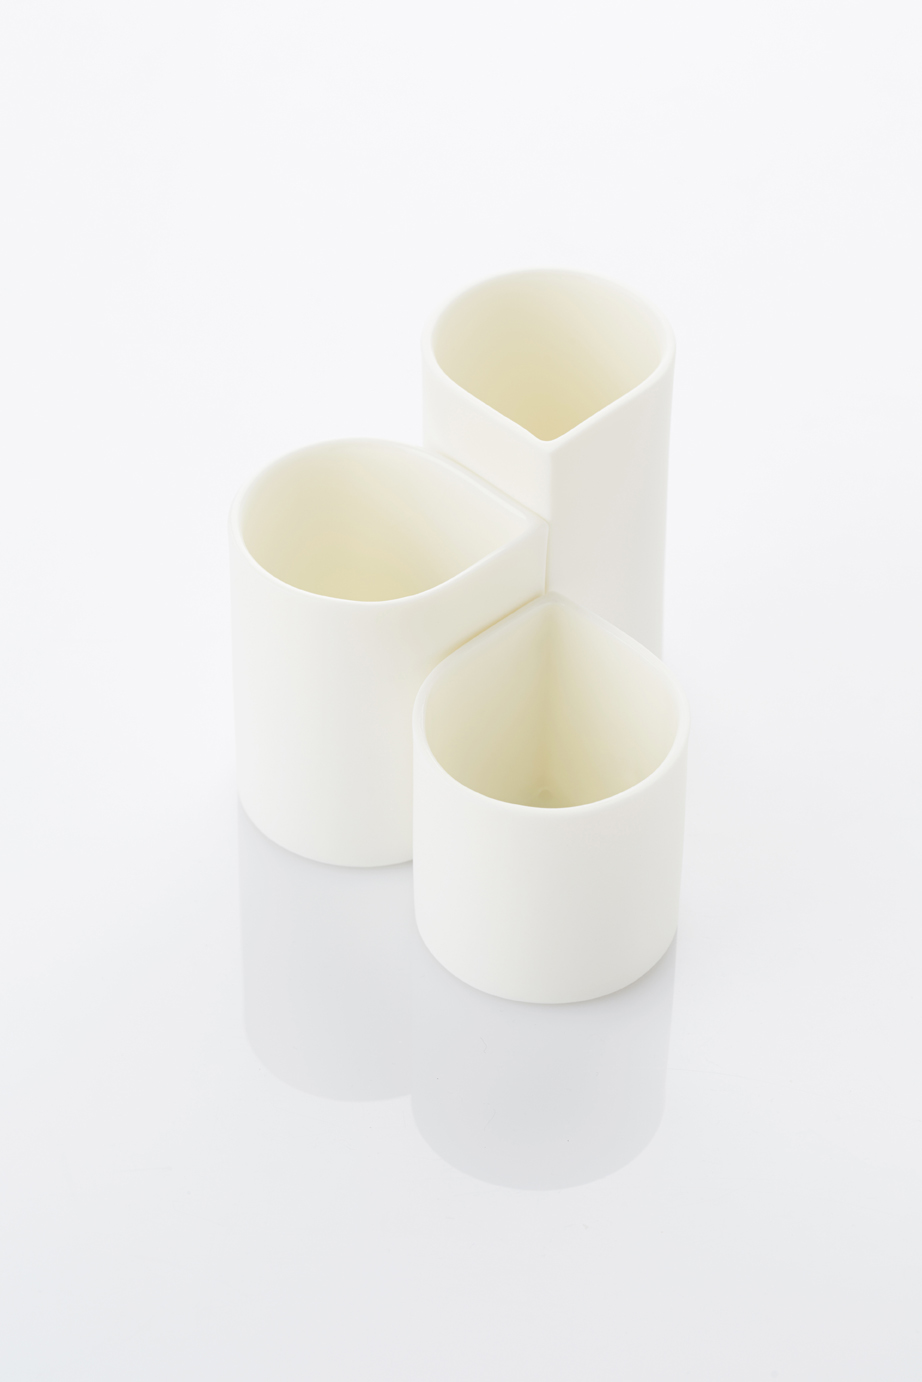 Rhythm - cup small, medium and large